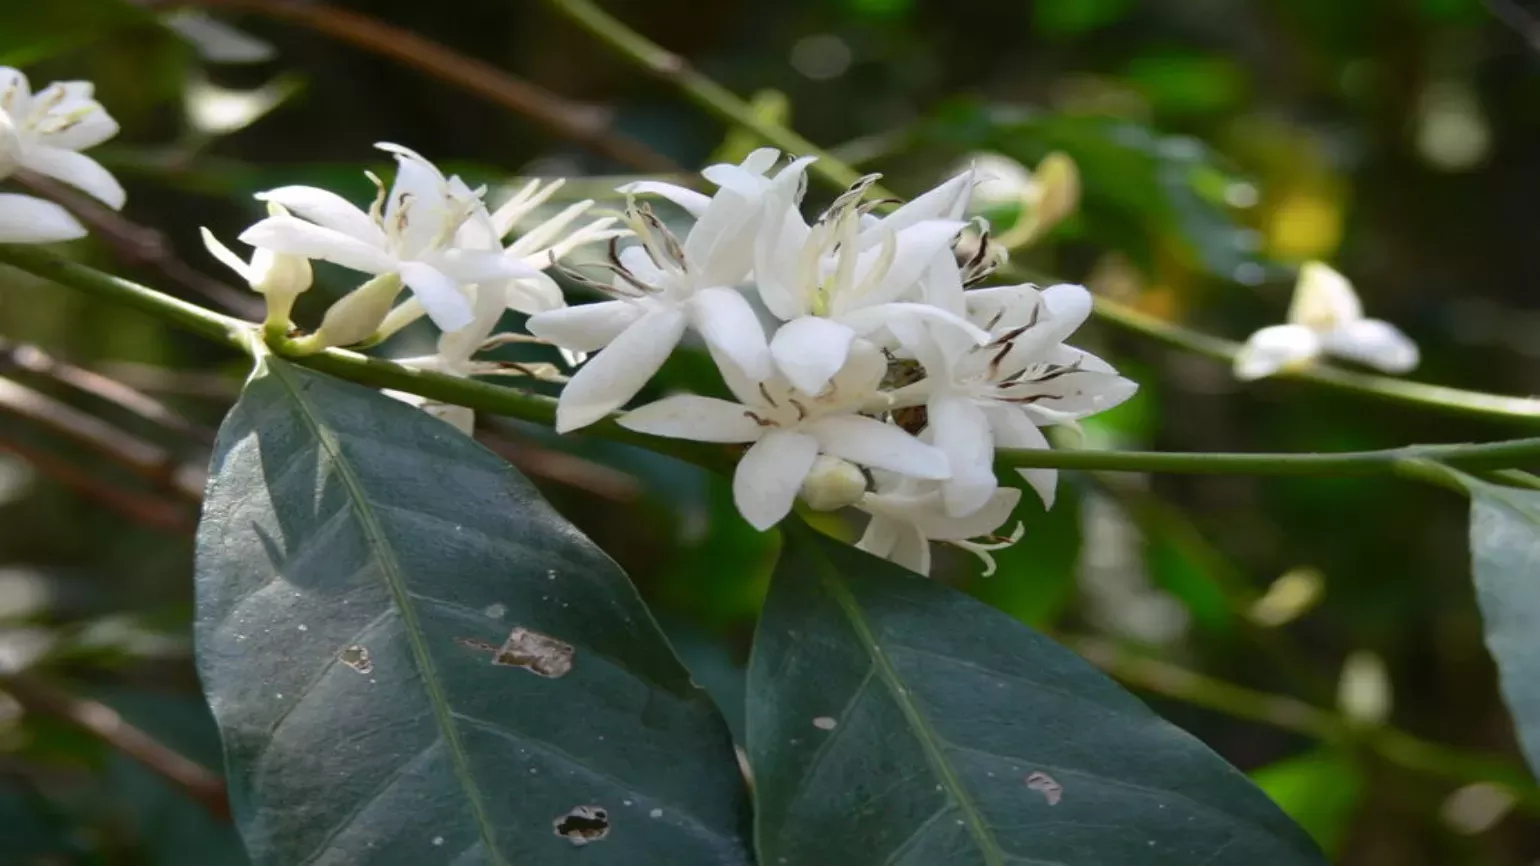 White delicate flowers of arabica coffee